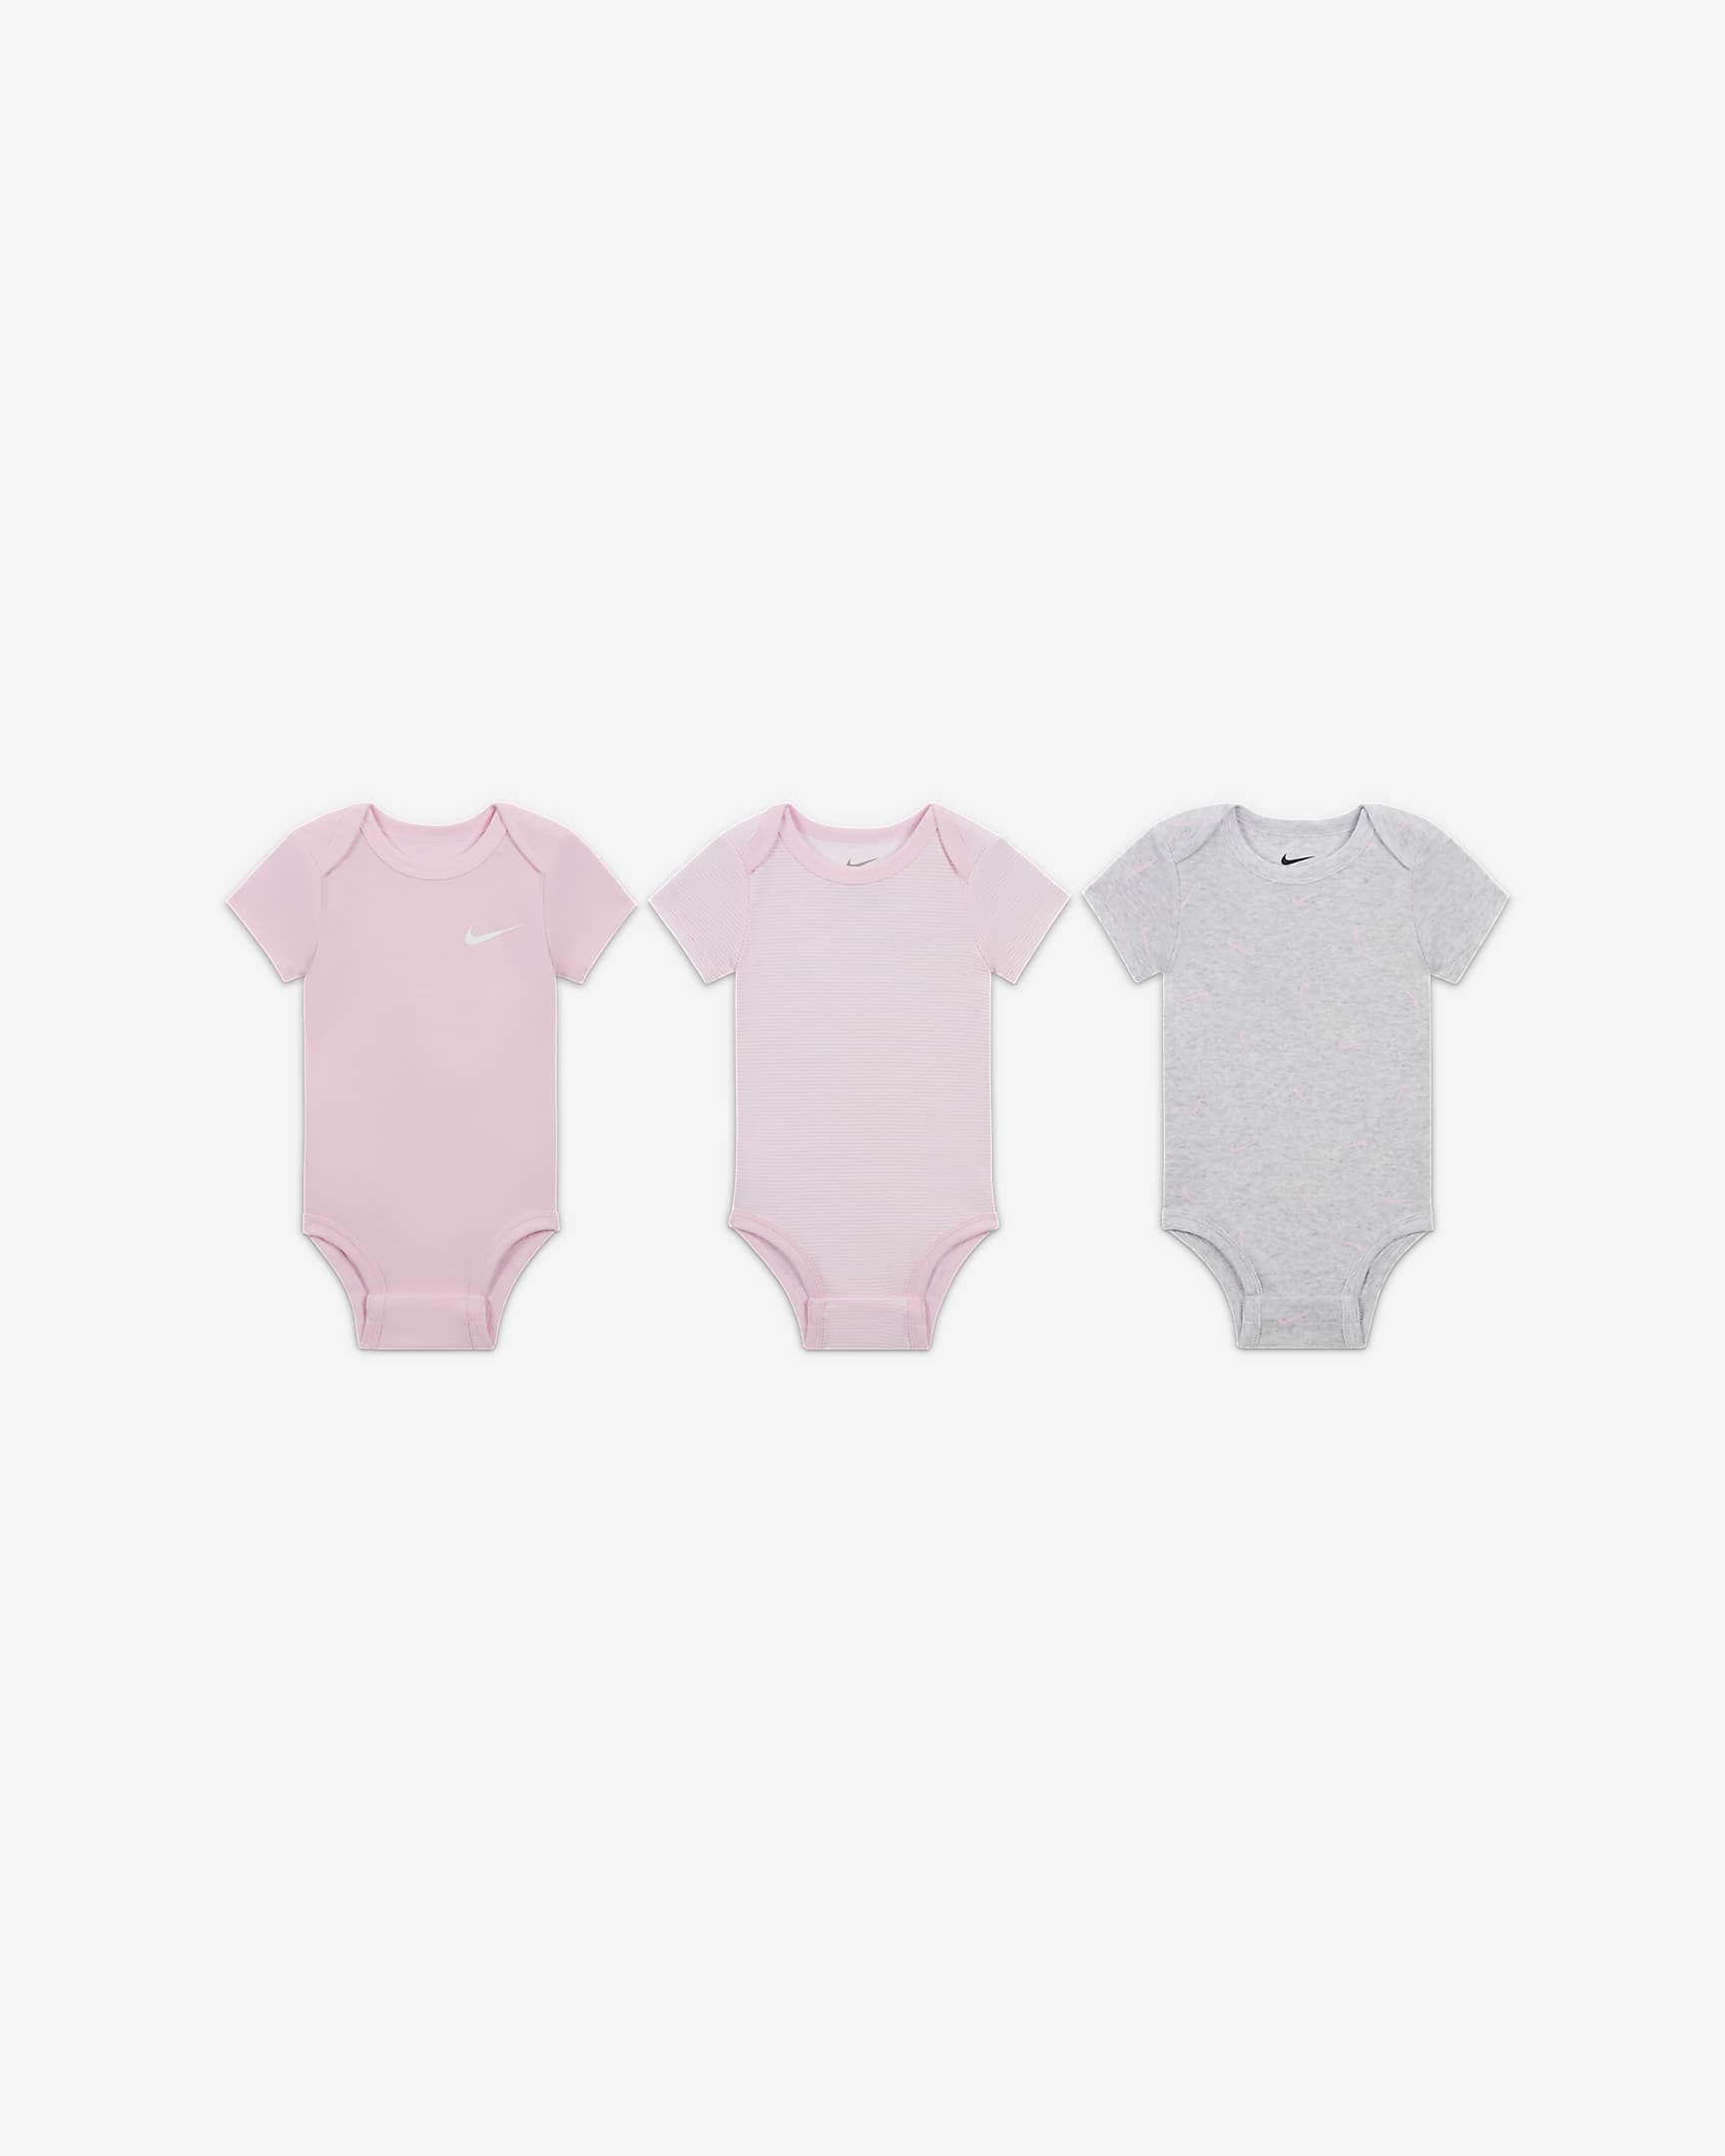 Nike Baby Essentials Baby (0–9M) 3-Pack Bodysuits - Multi-Colour/Birch Heather